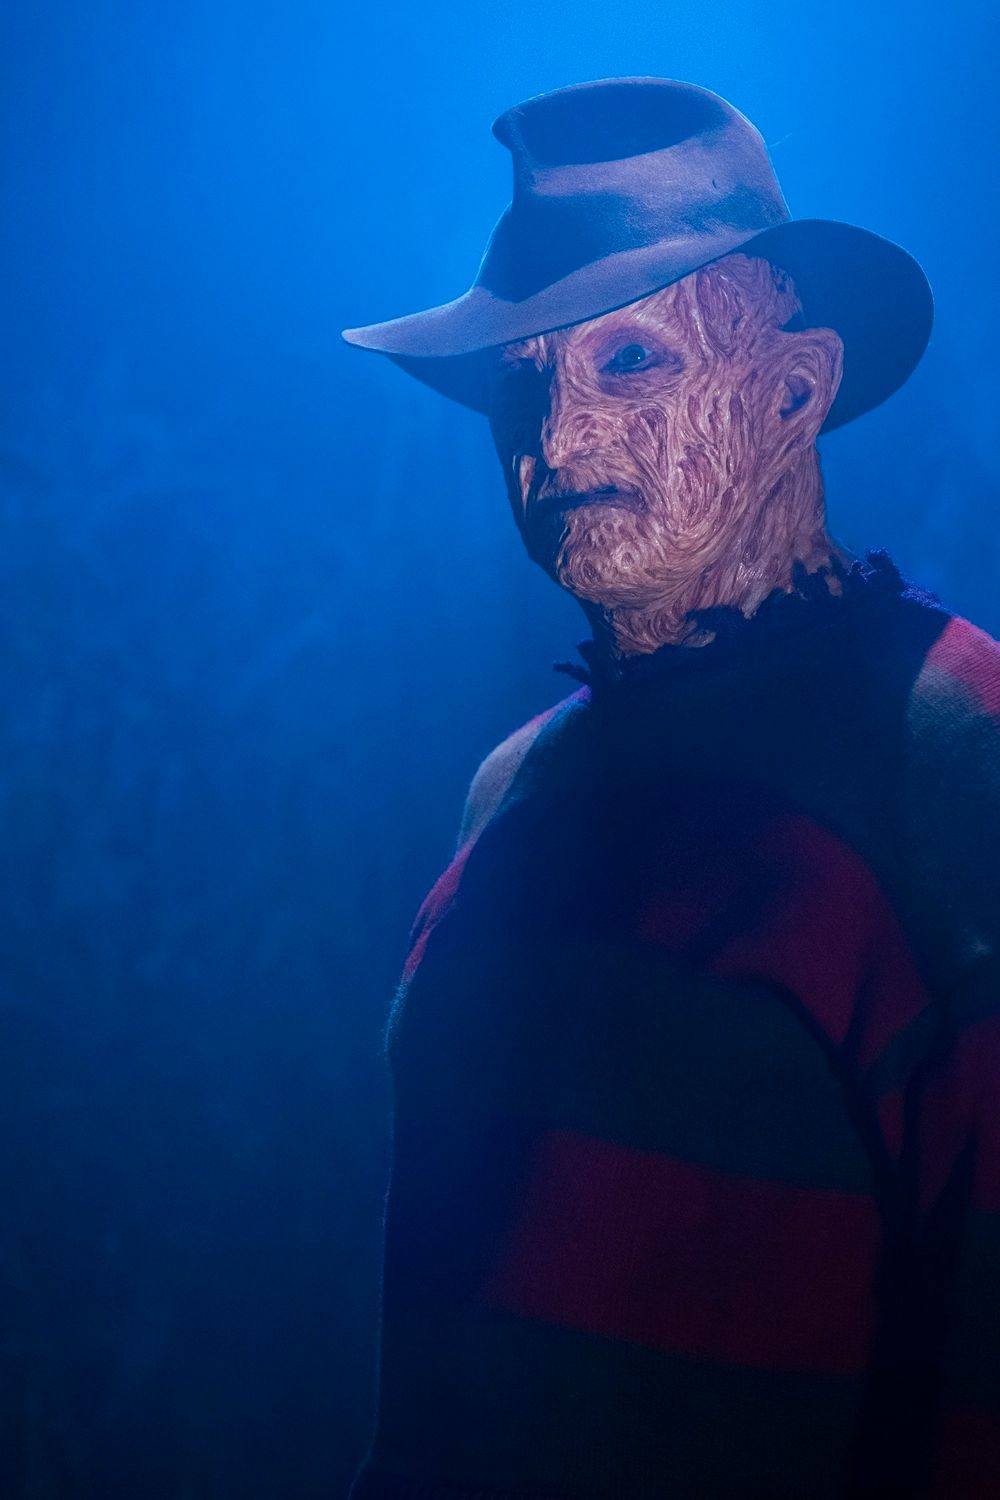 Freddy Krueger in The Goldbergs Halloween episode played by Robert Englund #3